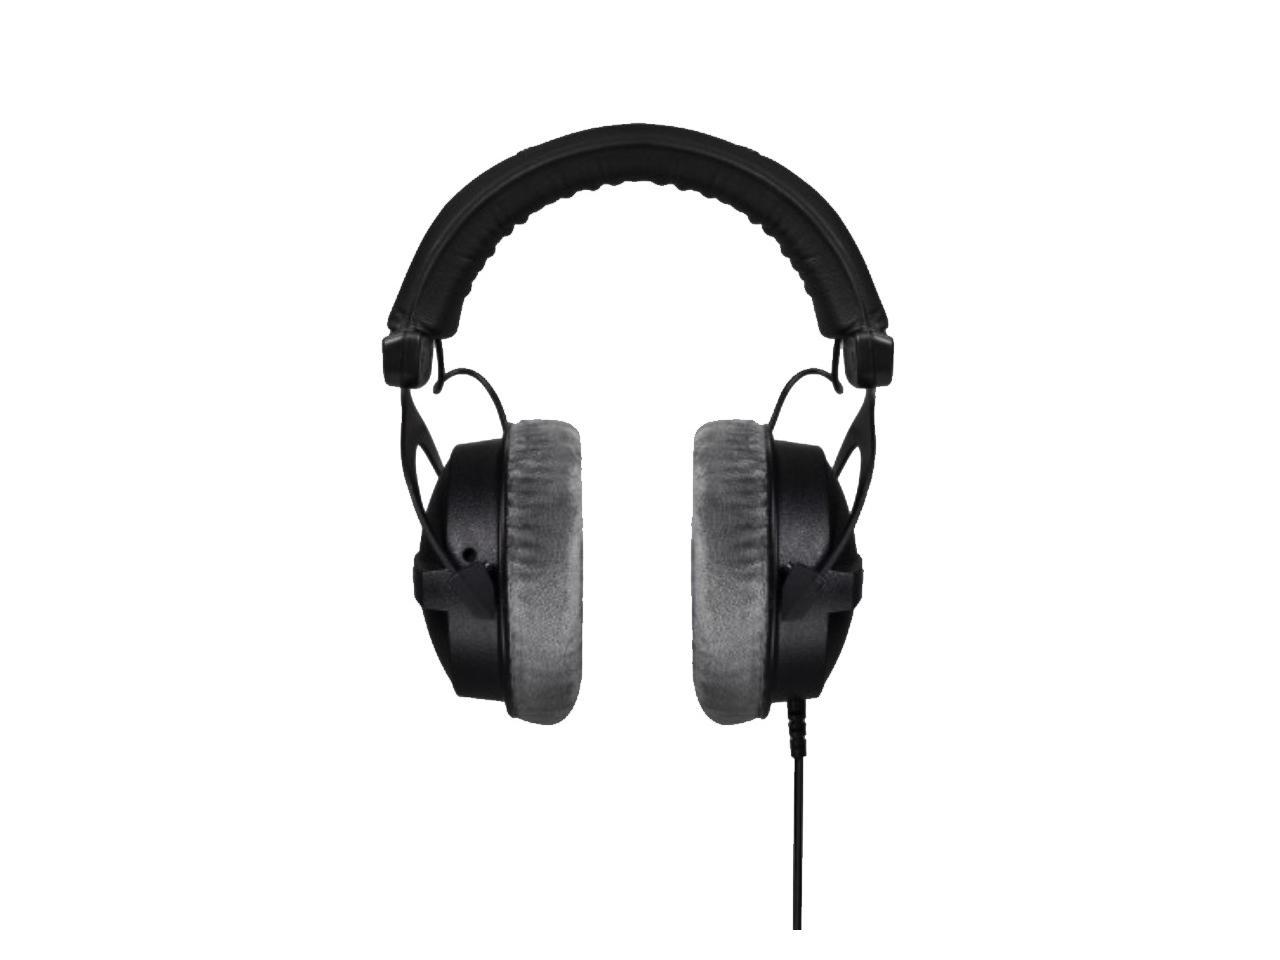 Beyerdynamic DT 770 Pro 250 Ohm Studio Reference Headphones $115